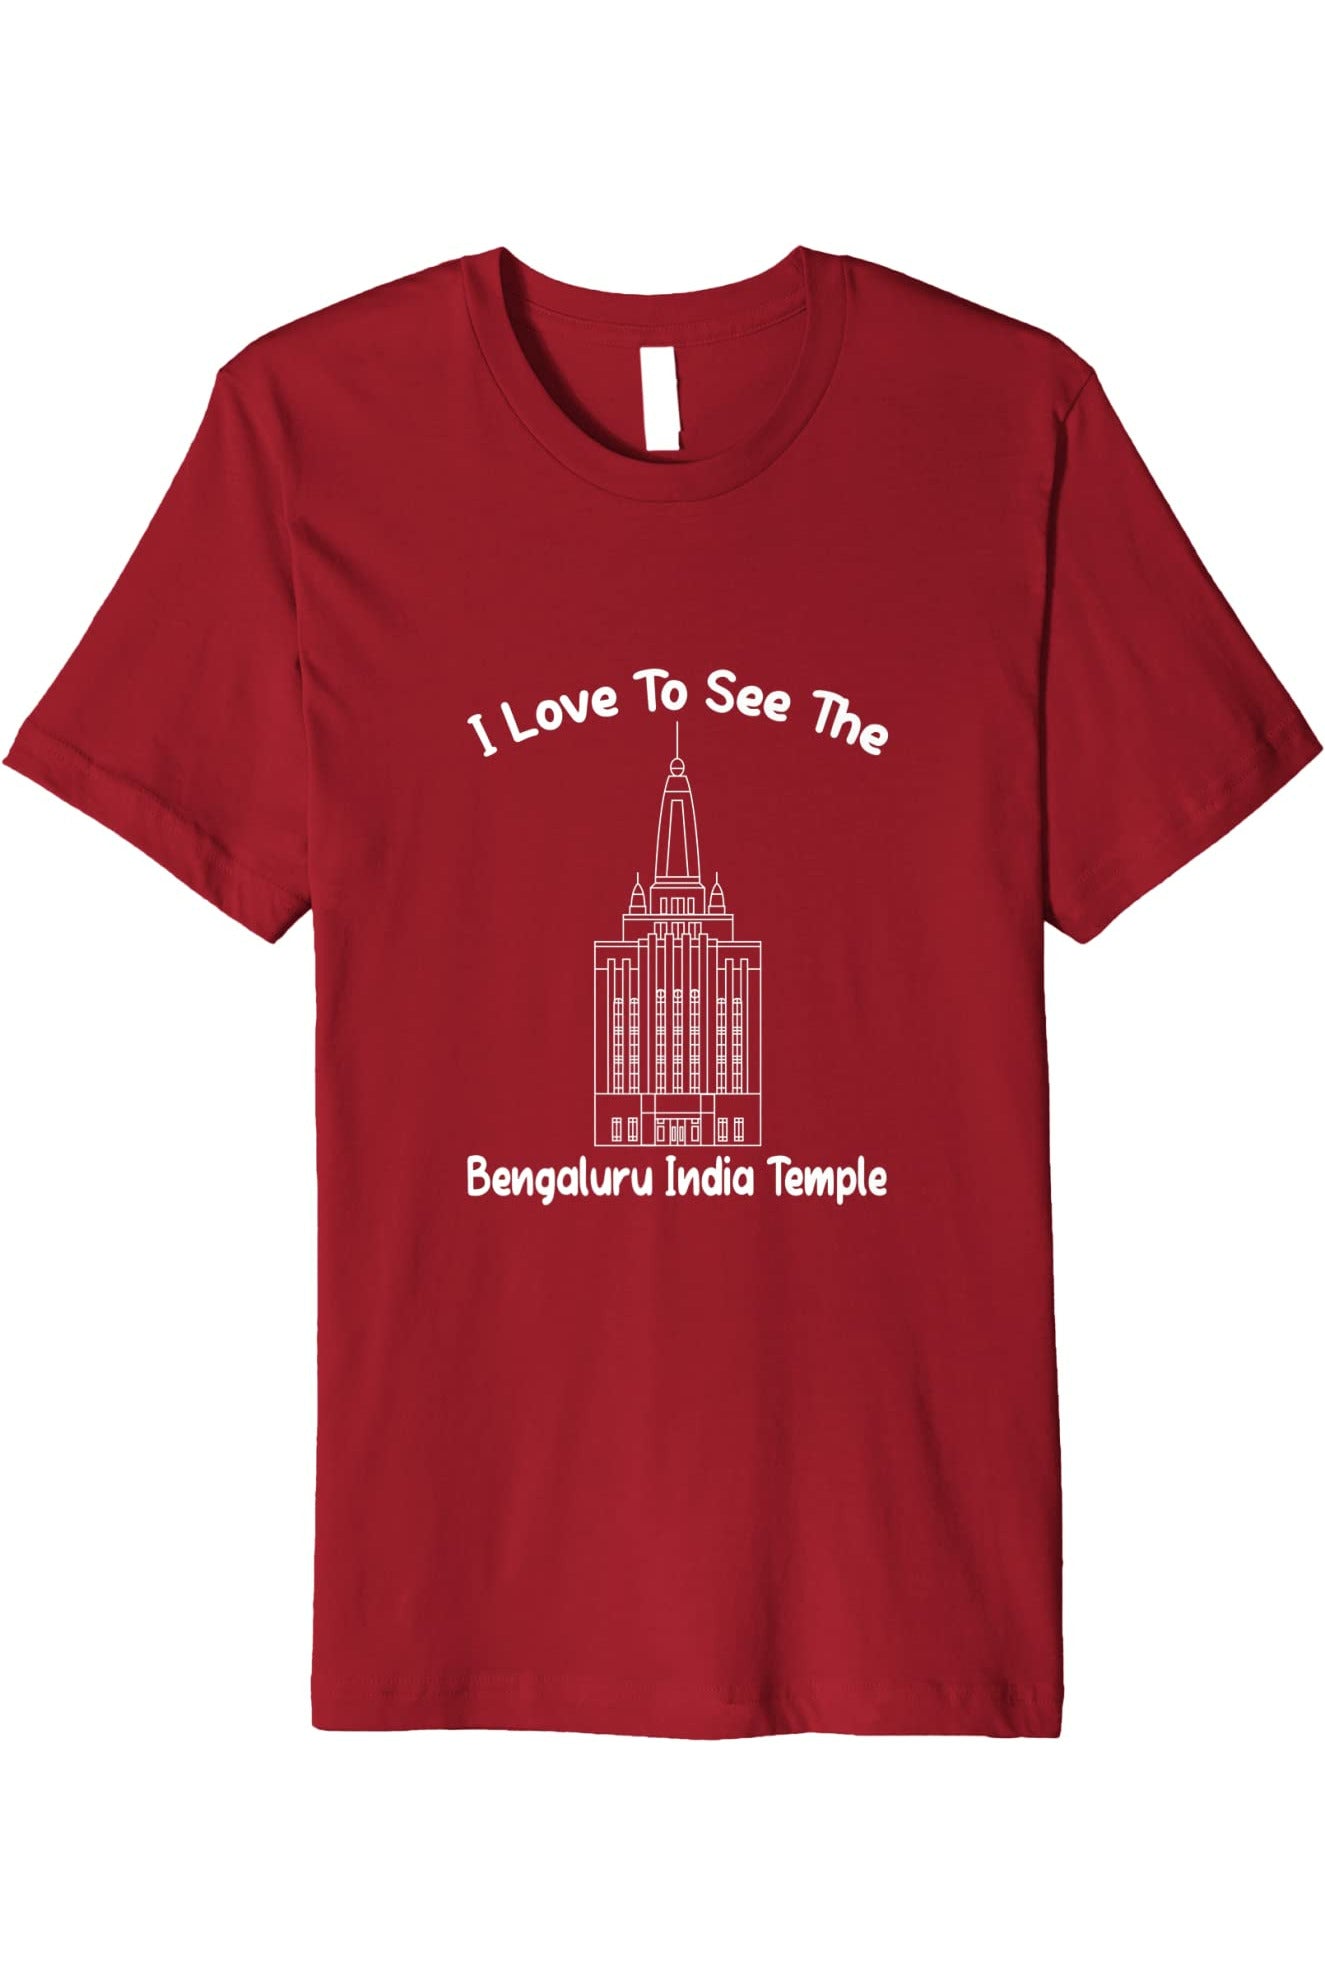 Bengaluru India Temple T-Shirt - Premium - Primary Style (English) US